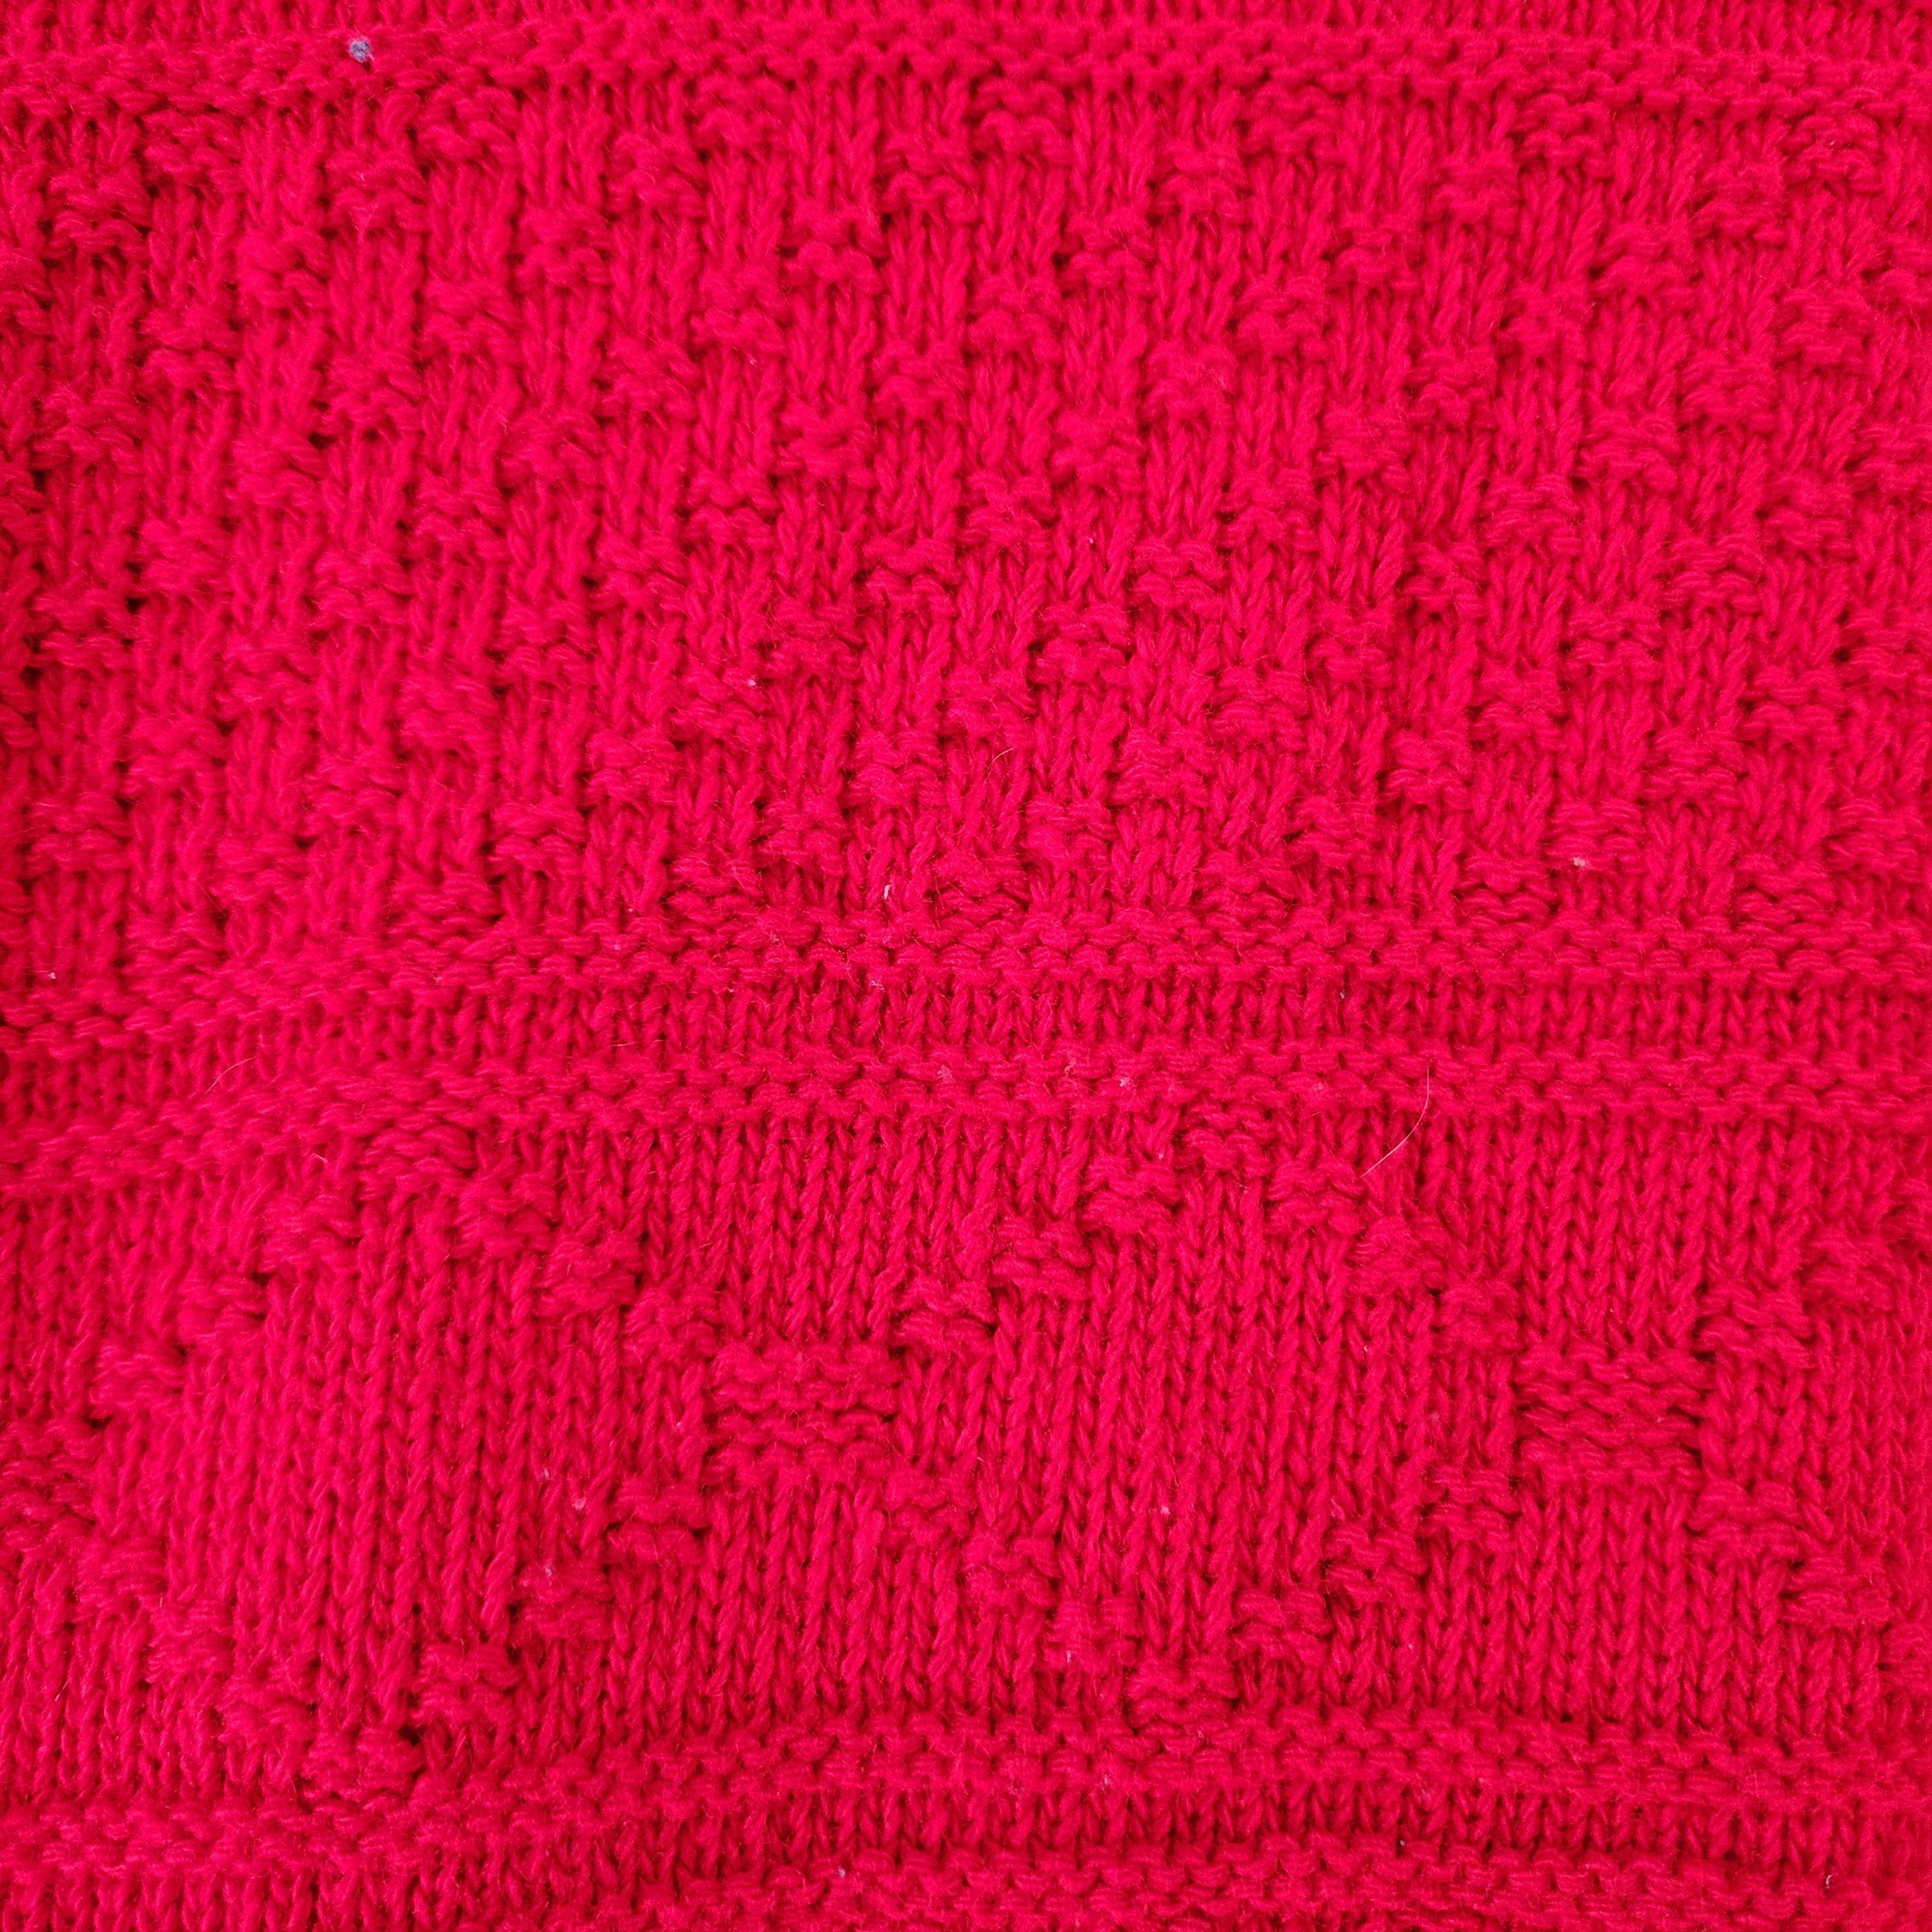 Jason Daniels Vintage Crewneck Knit Red Sweater Size XL